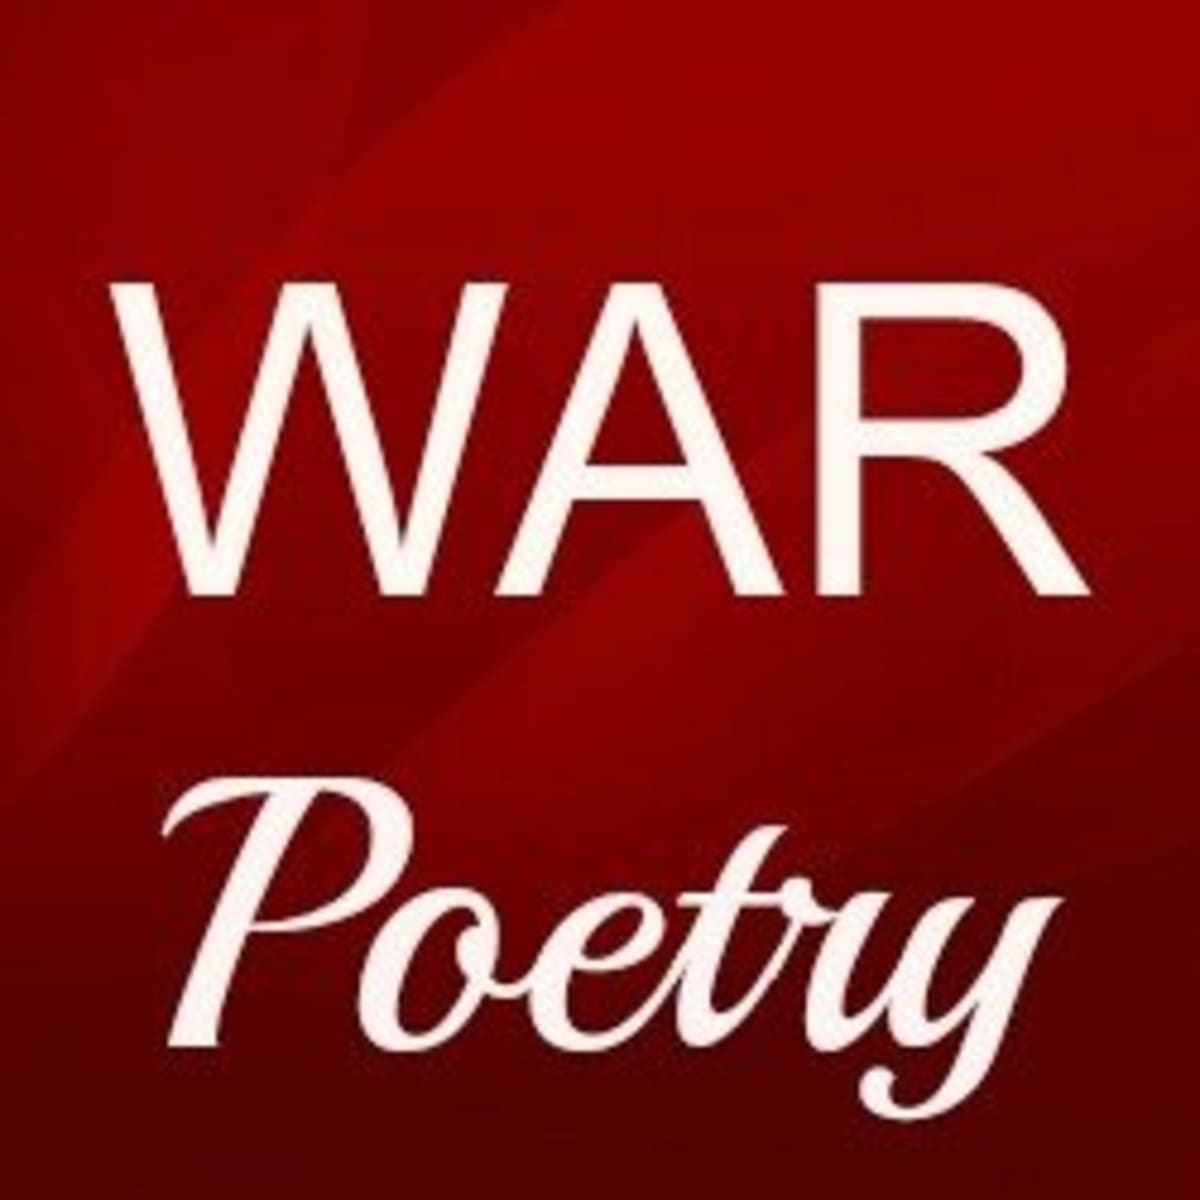 vietnam war poems by famous poets